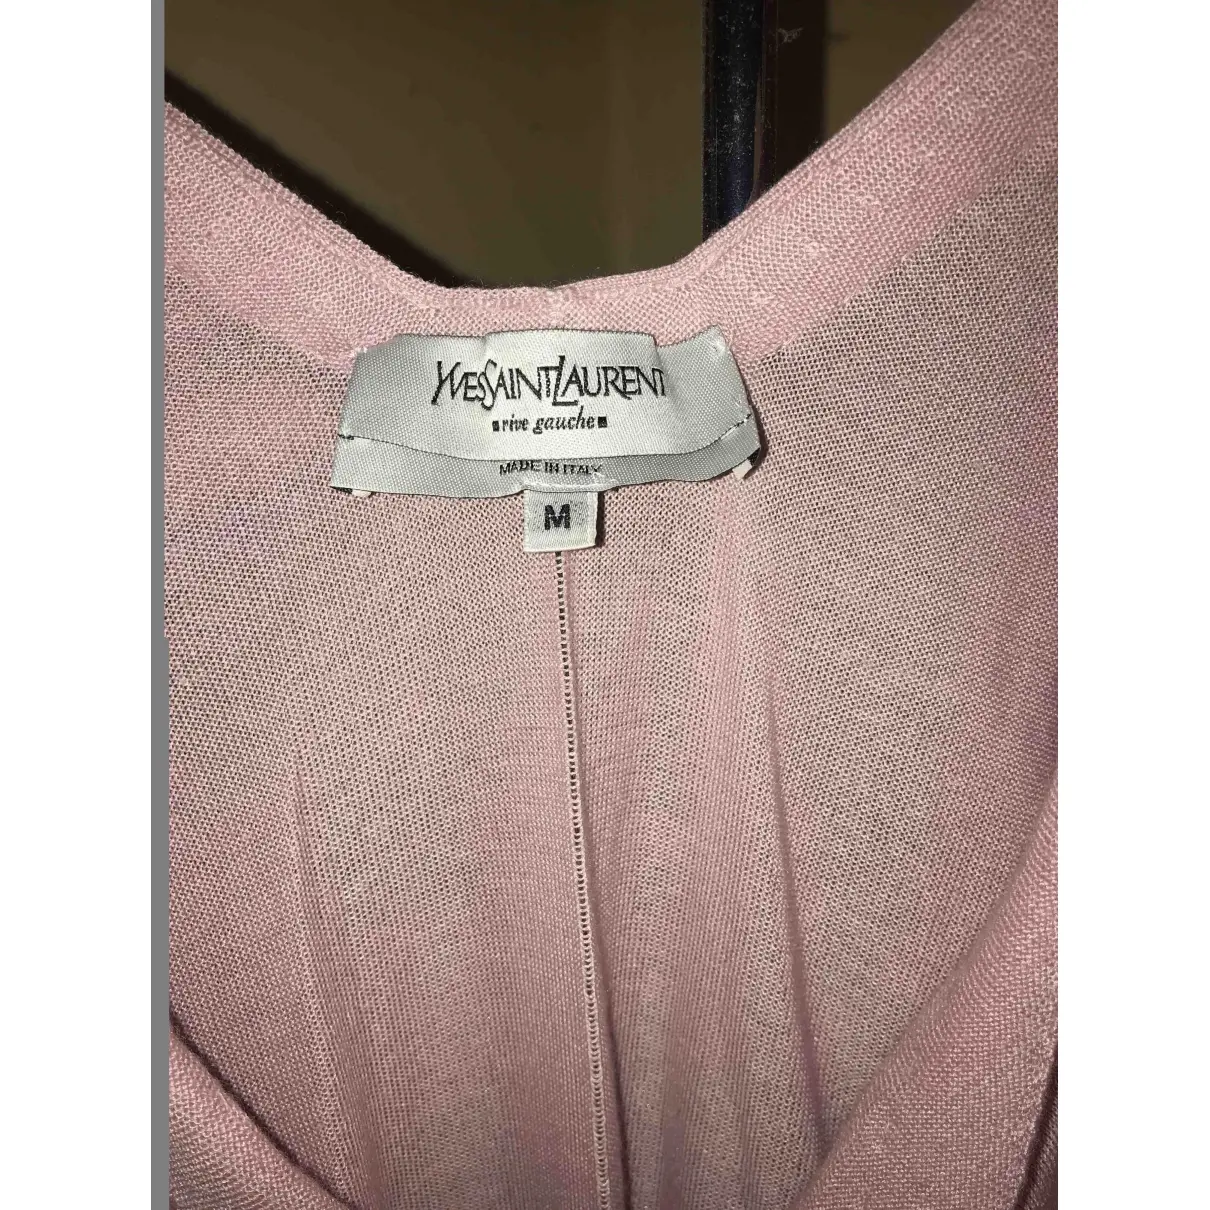 Yves Saint Laurent Cashmere camisole for sale